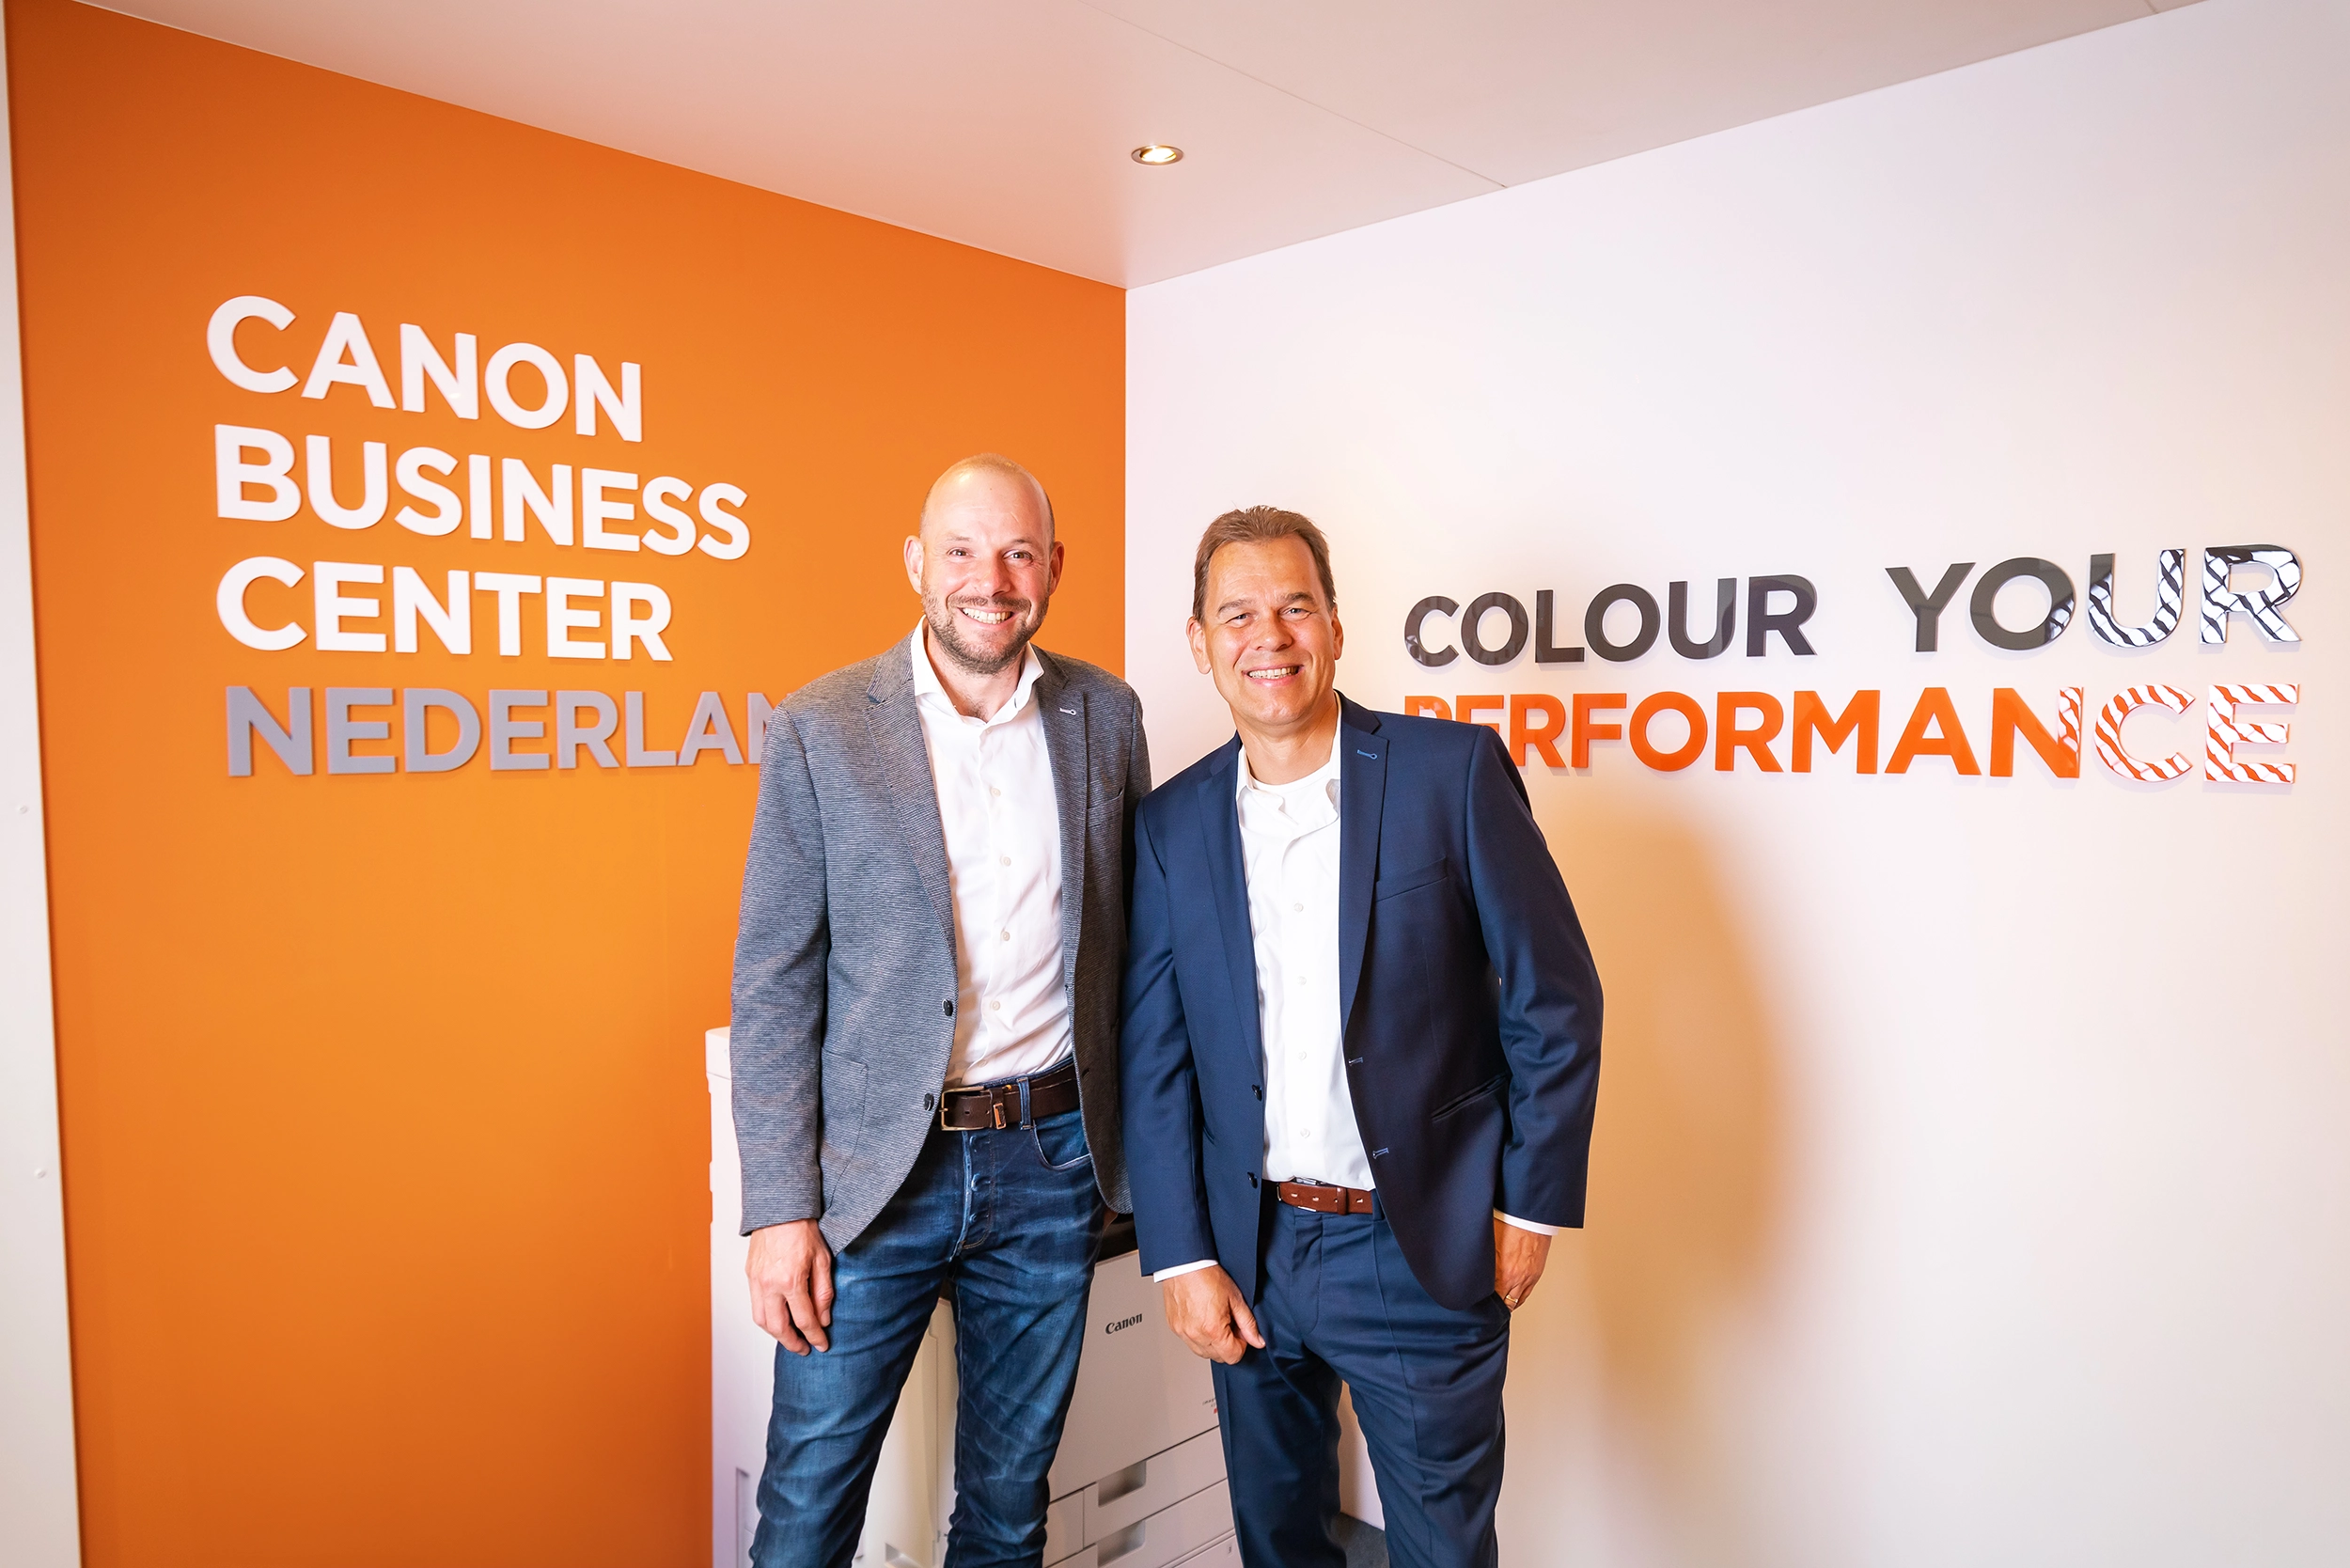 Partnerschap met Canon Business Center Nederland